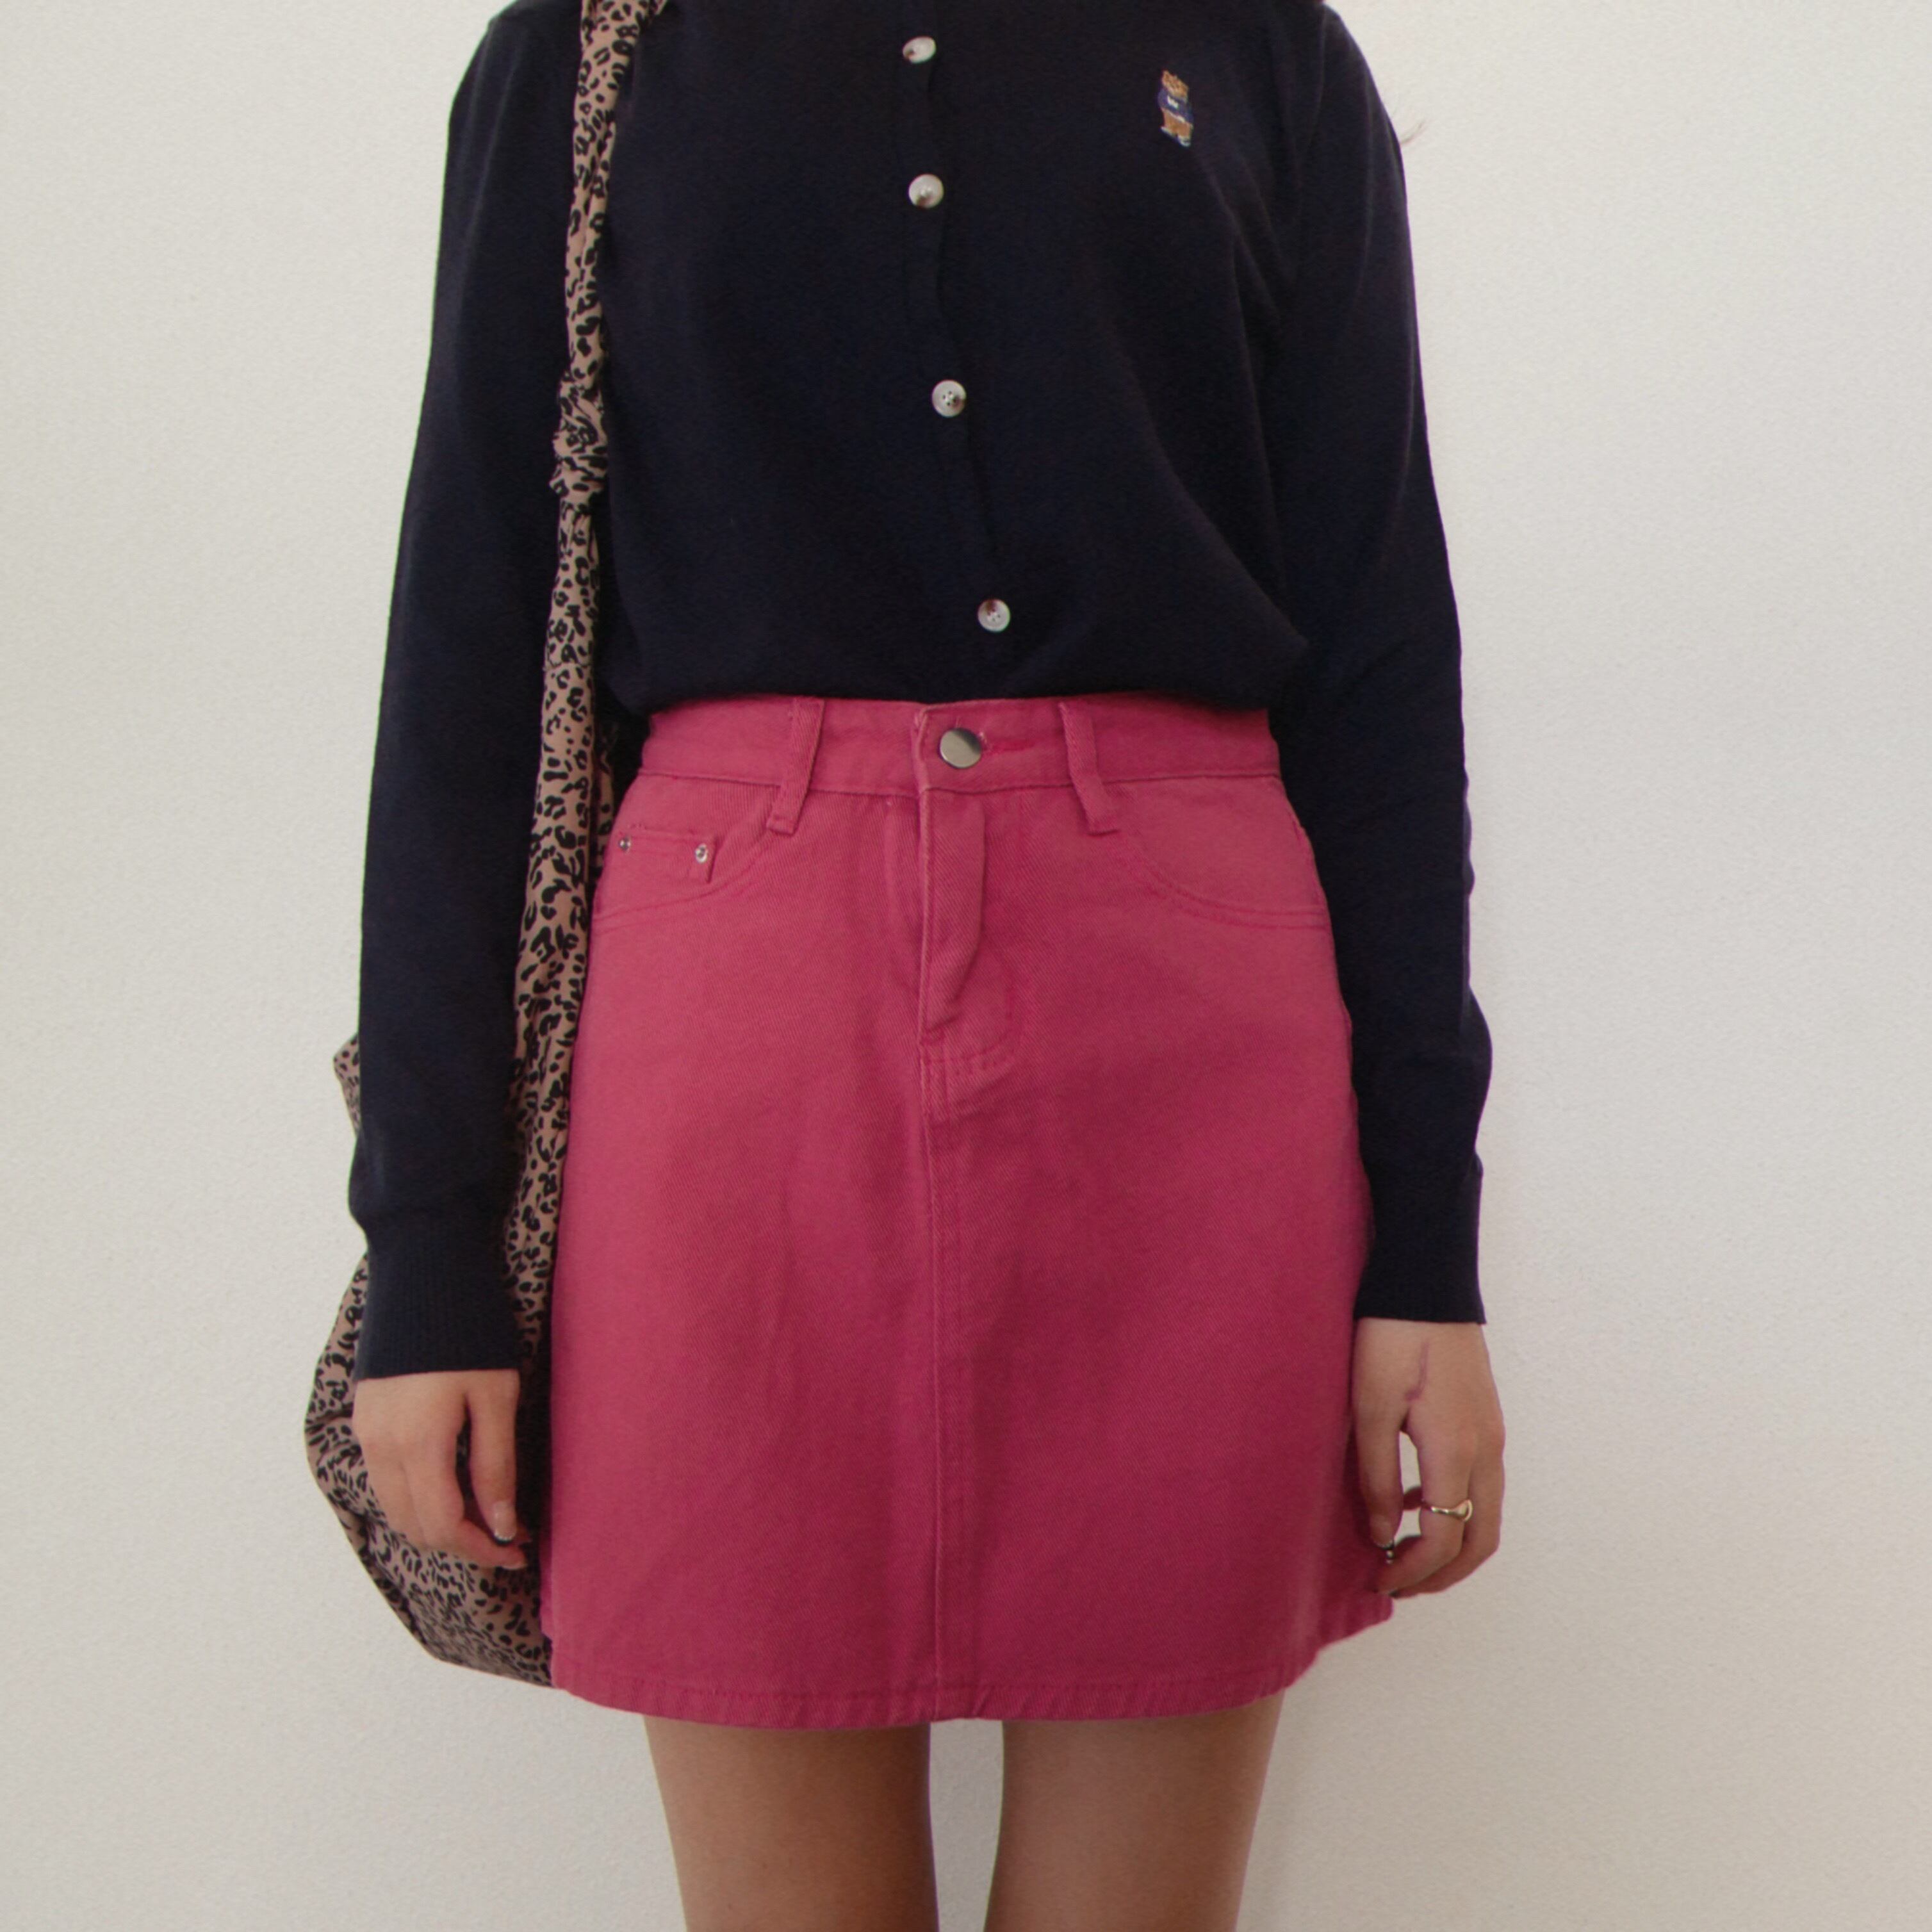 vivid pink mini skirt